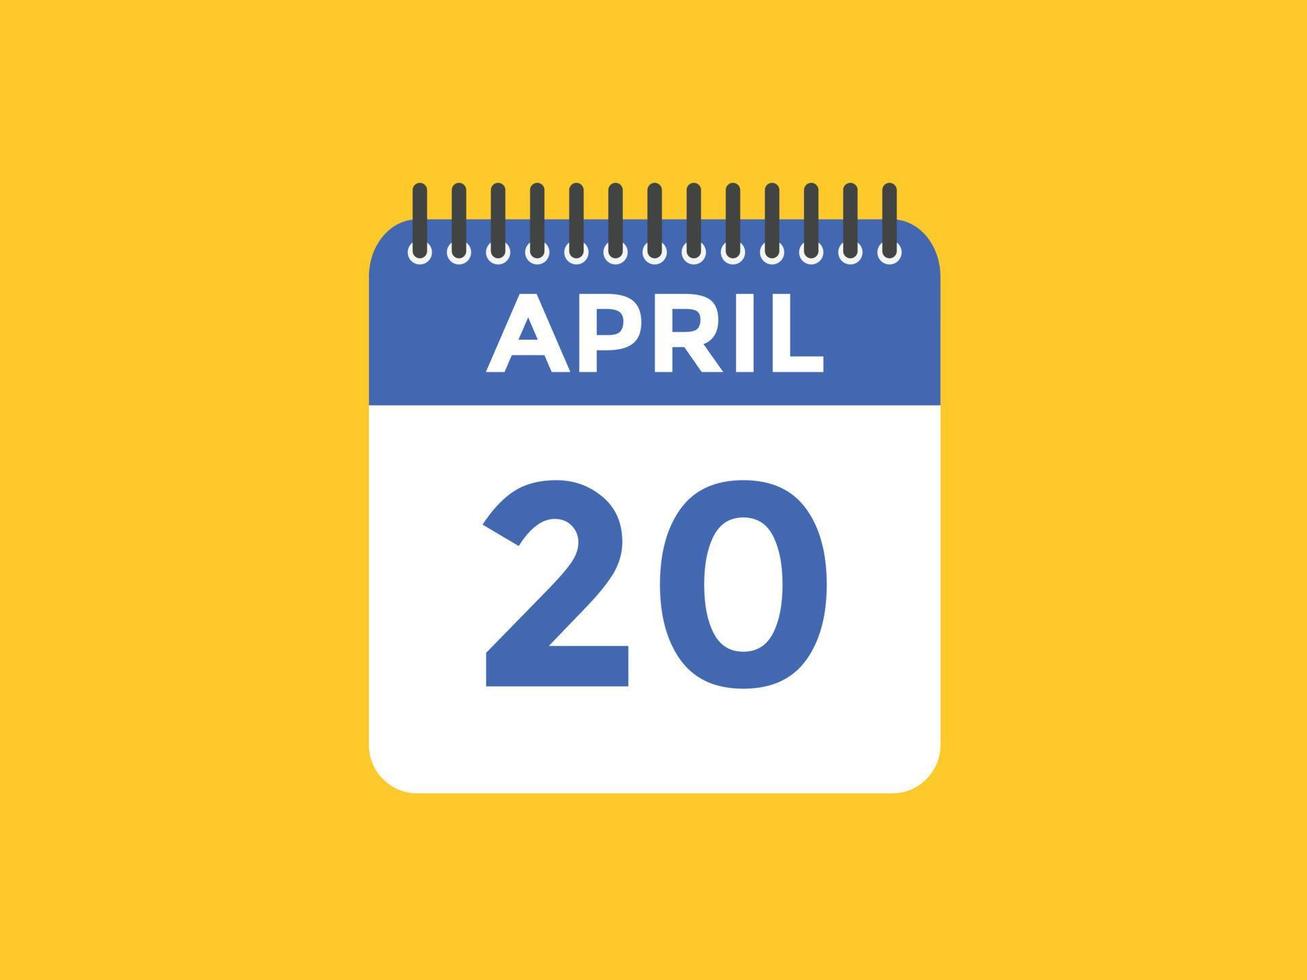 april 20 kalender påminnelse. 20:e april dagligen kalender ikon mall. kalender 20:e april ikon design mall. vektor illustration